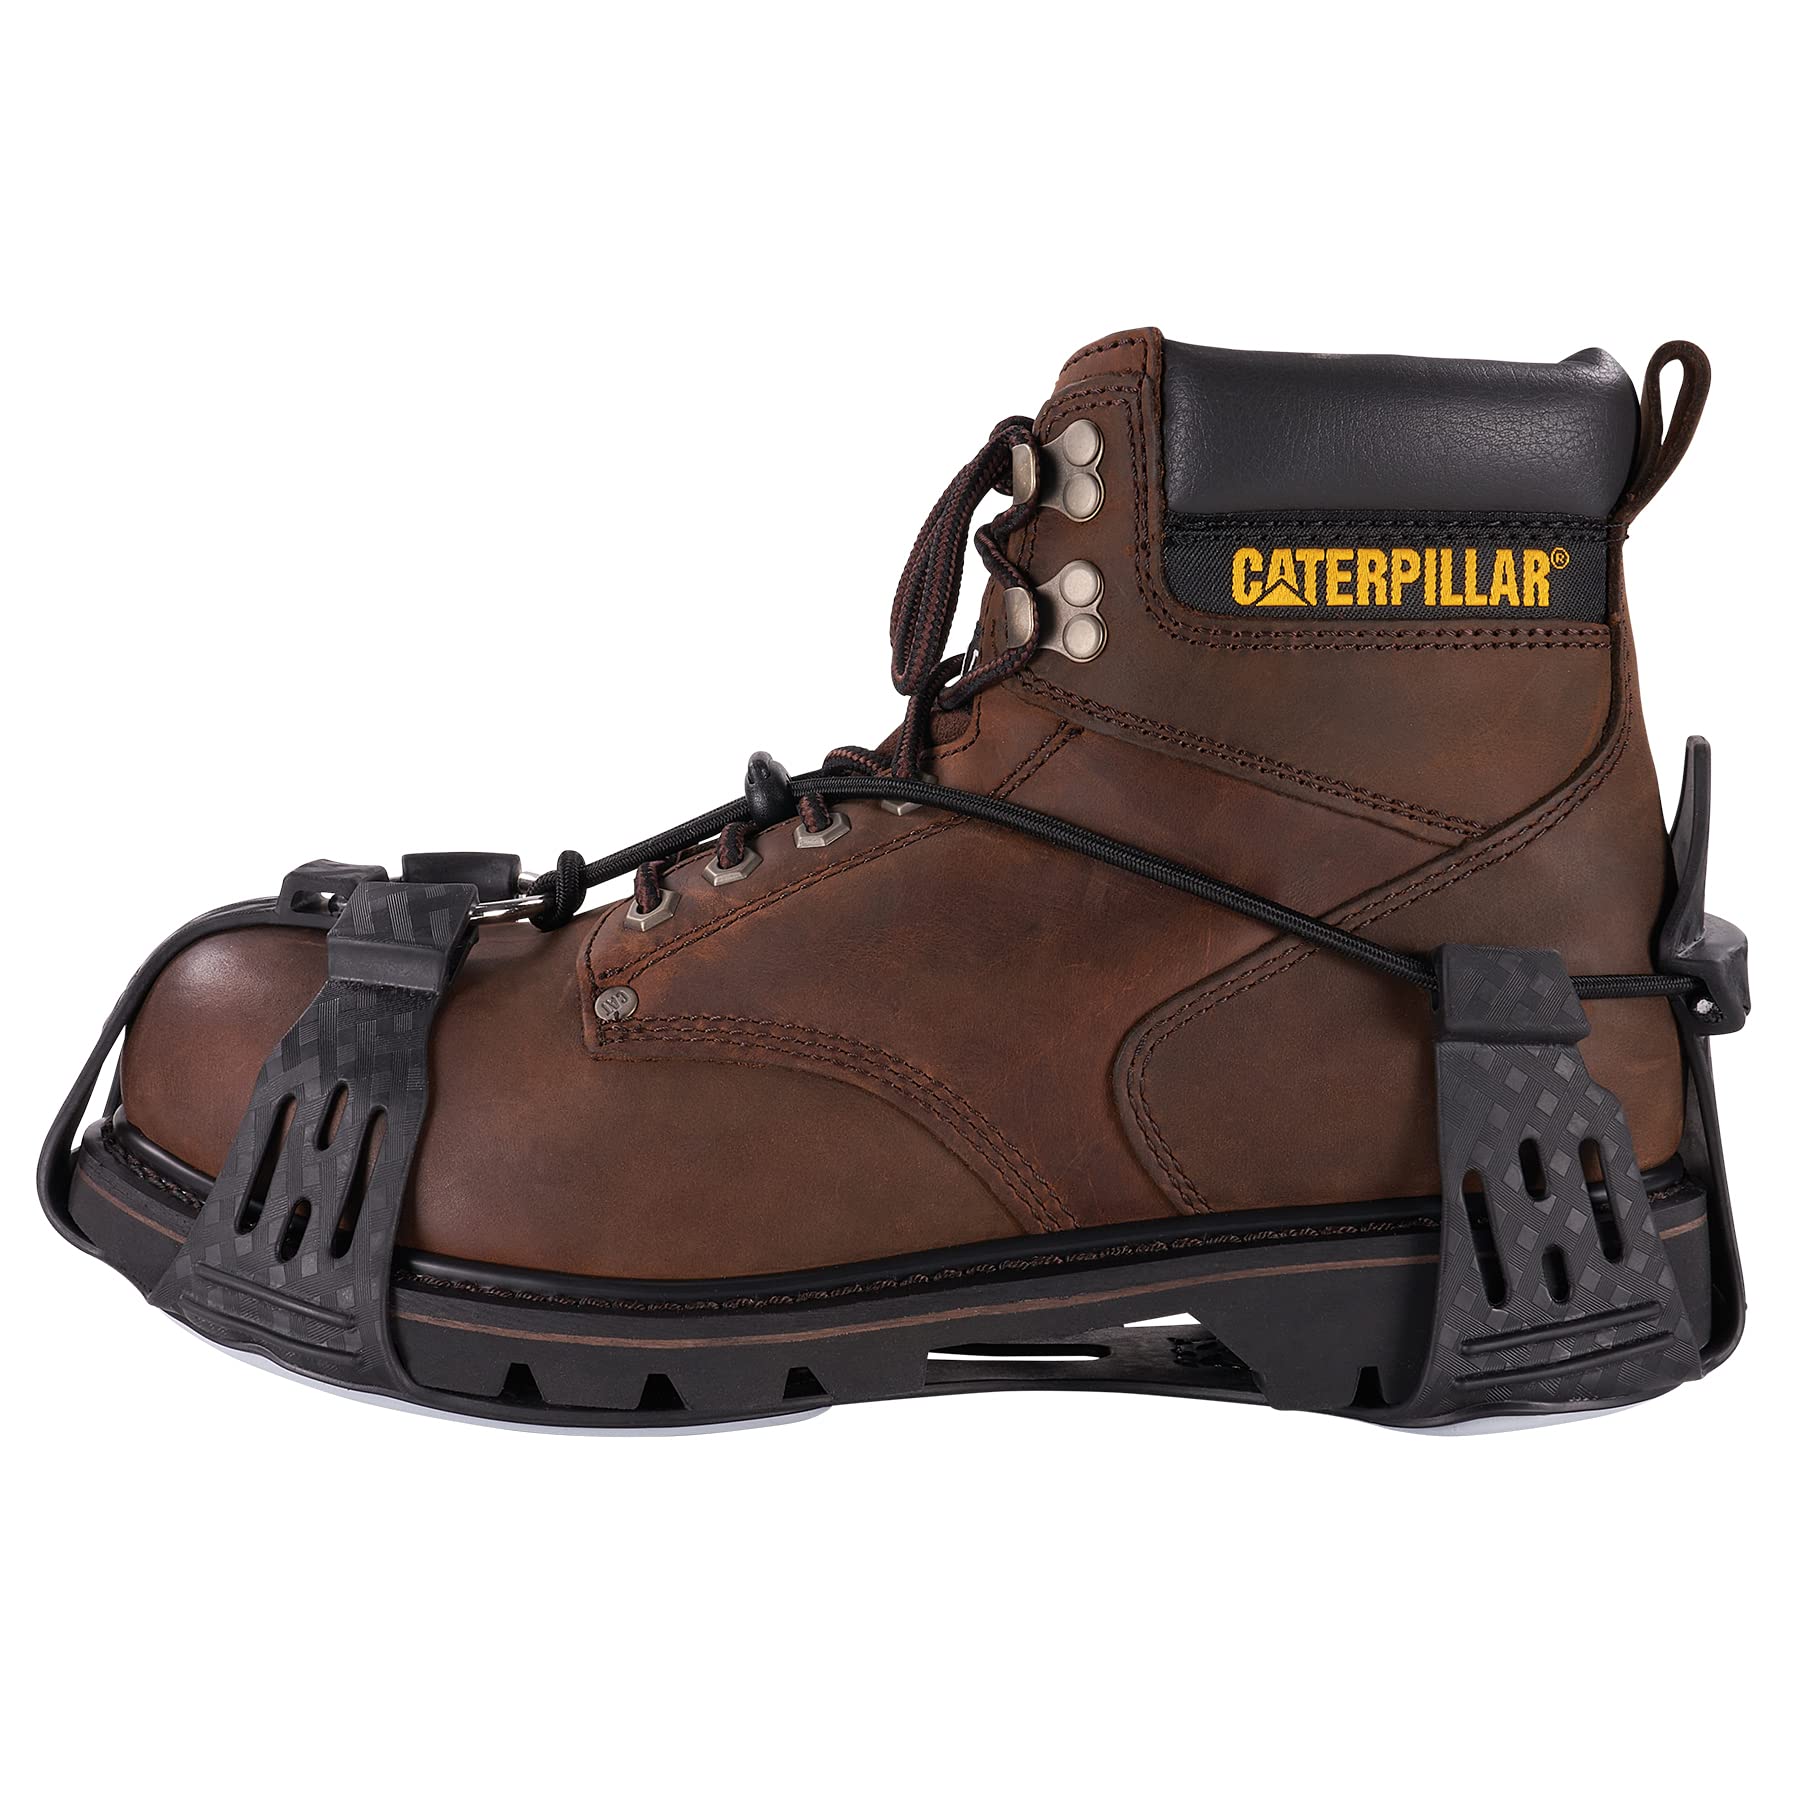 Ergodyne TREX Slip-On Indoor Anti-Slip Shoe Traction, Oil Resistant Anti Slip Soles for Boots, XL, Black